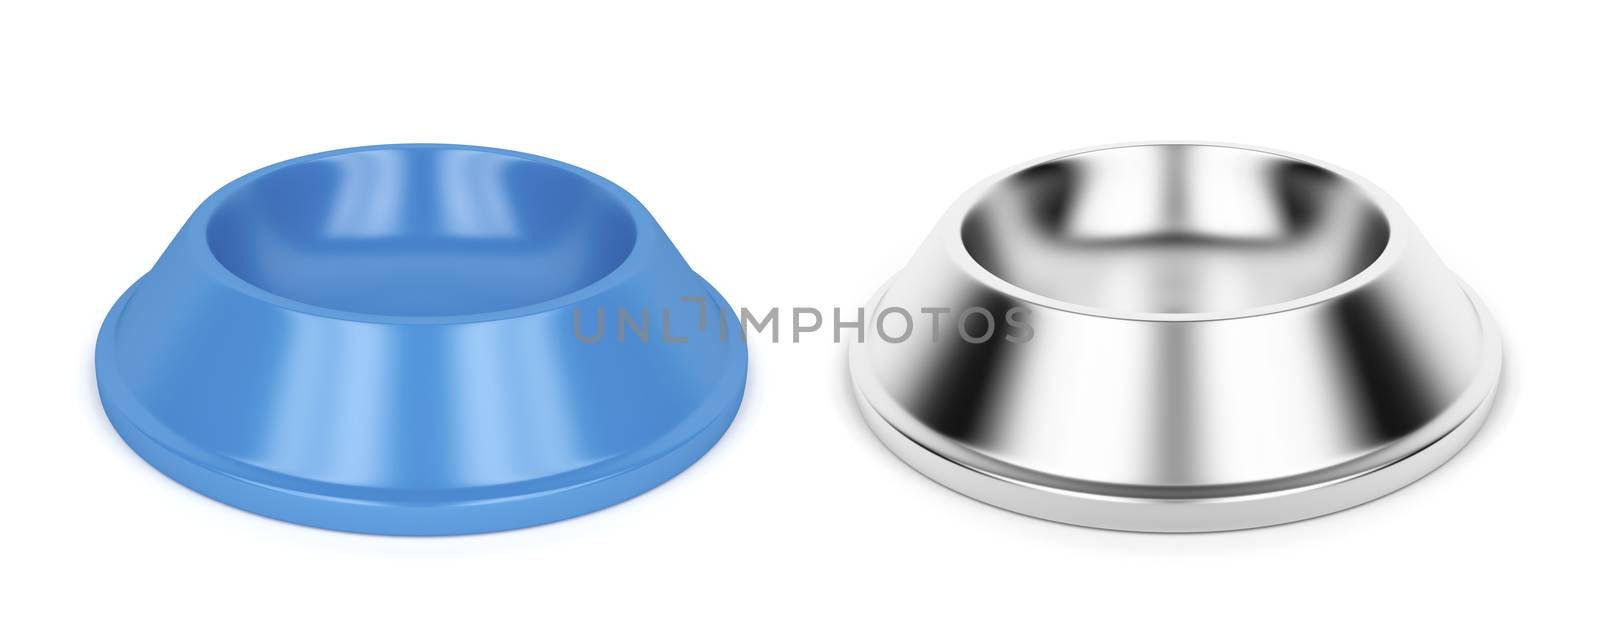 Plastic and metal pet bowls